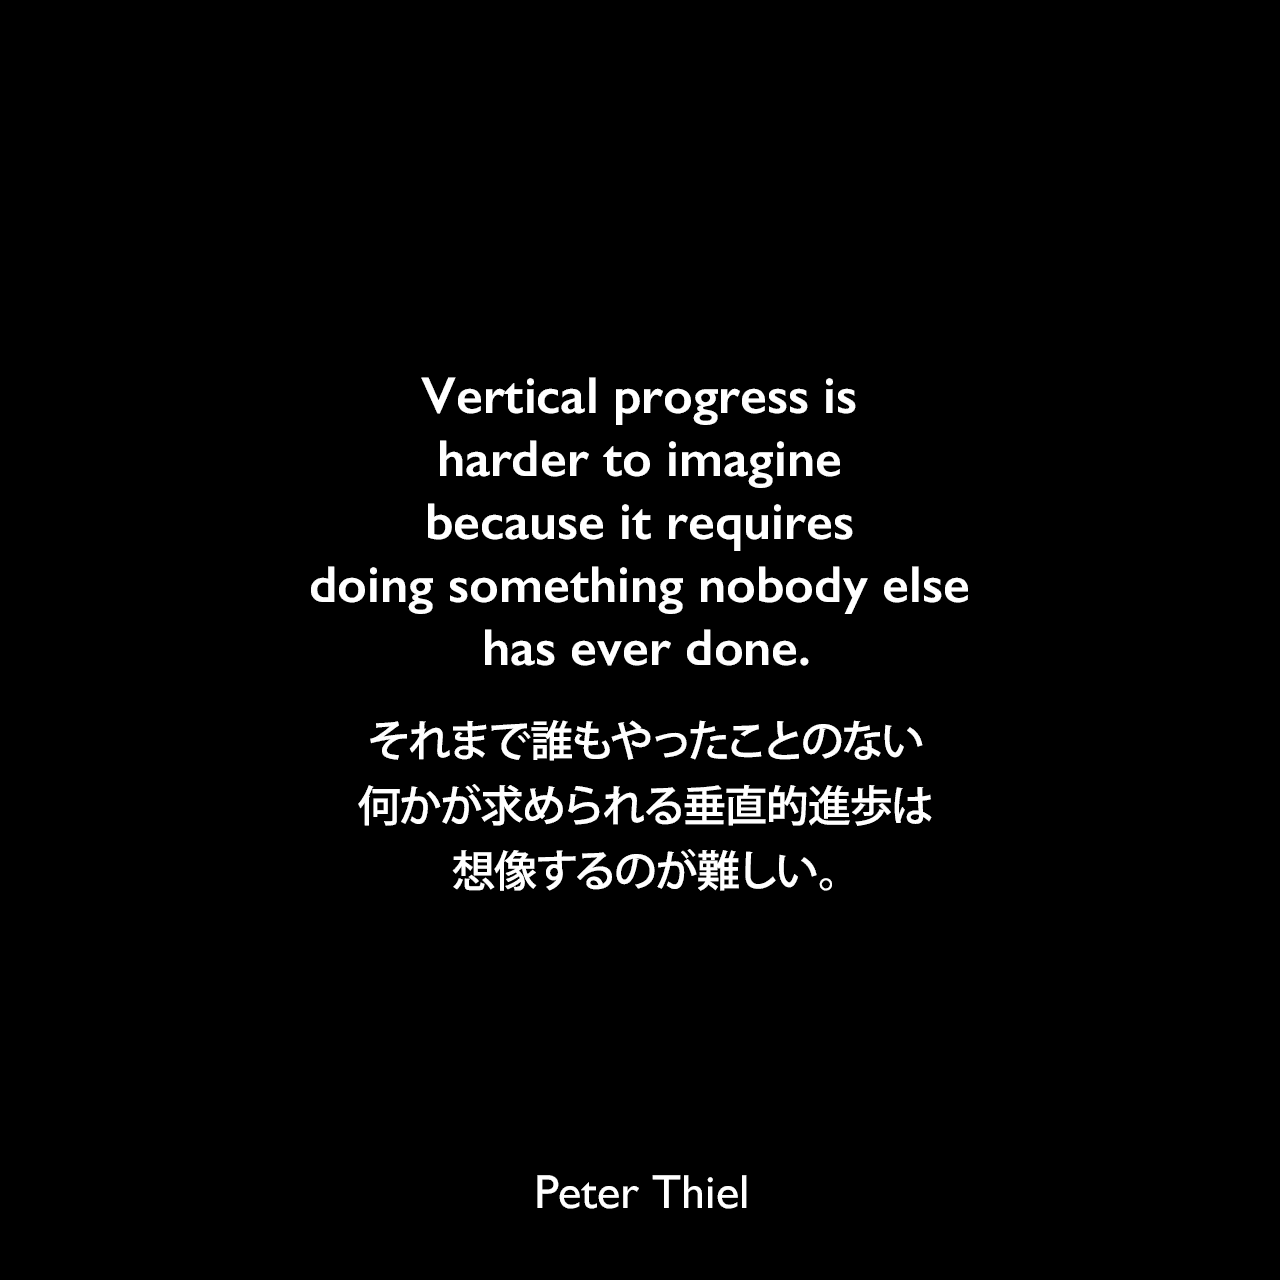 Vertical progress is harder to imagine because it requires doing something nobody else has ever done.それまで誰もやったことのない何かが求められる垂直的進歩は、想像するのが難しい。- ピーター・ティールの本「Zero to One」よりPeter Thiel